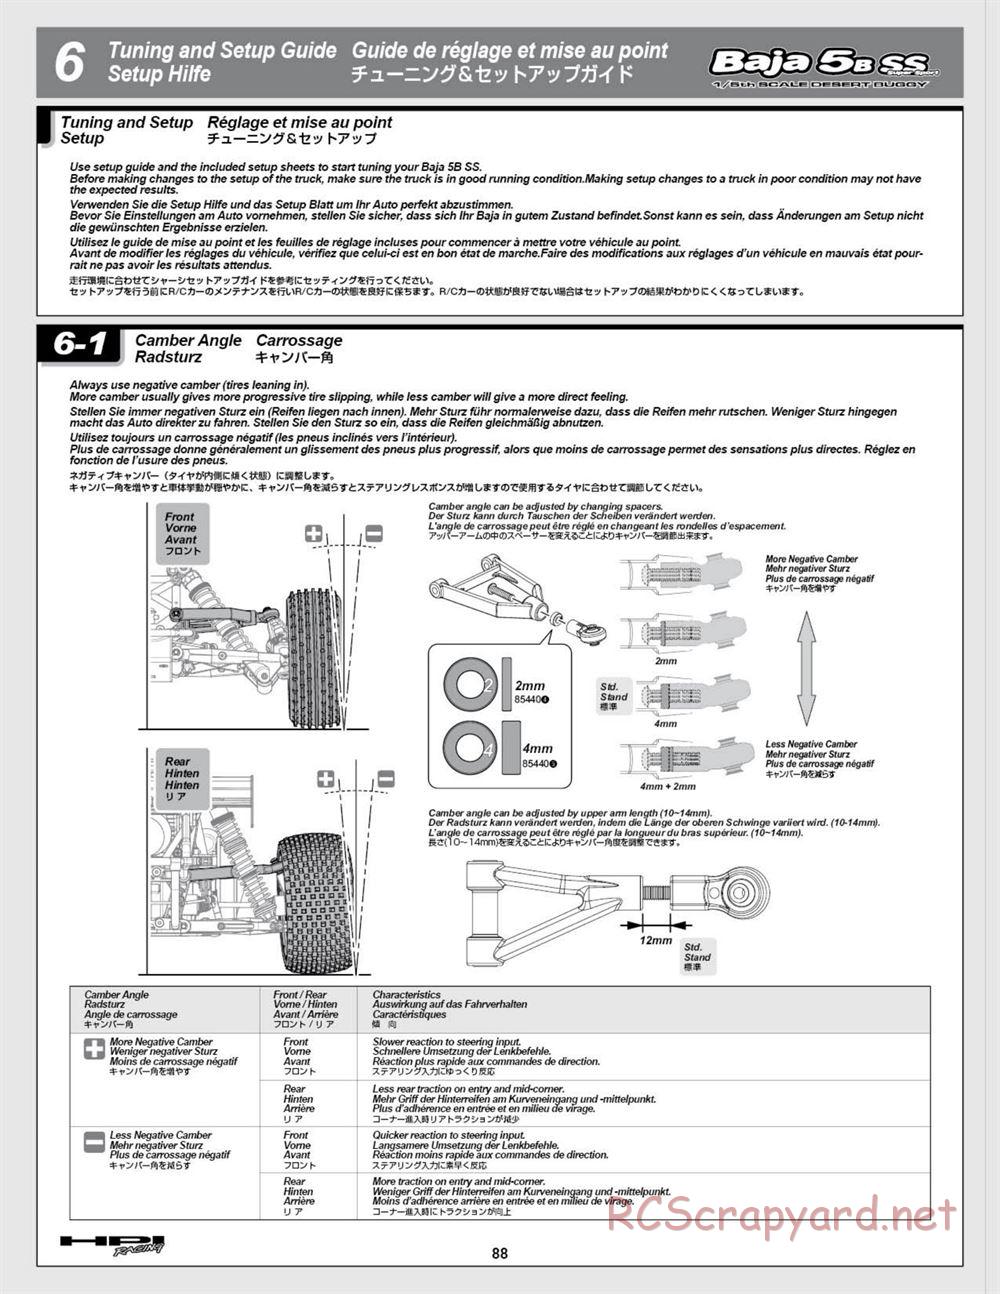 HPI - Baja 5b SS - Manual - Page 88